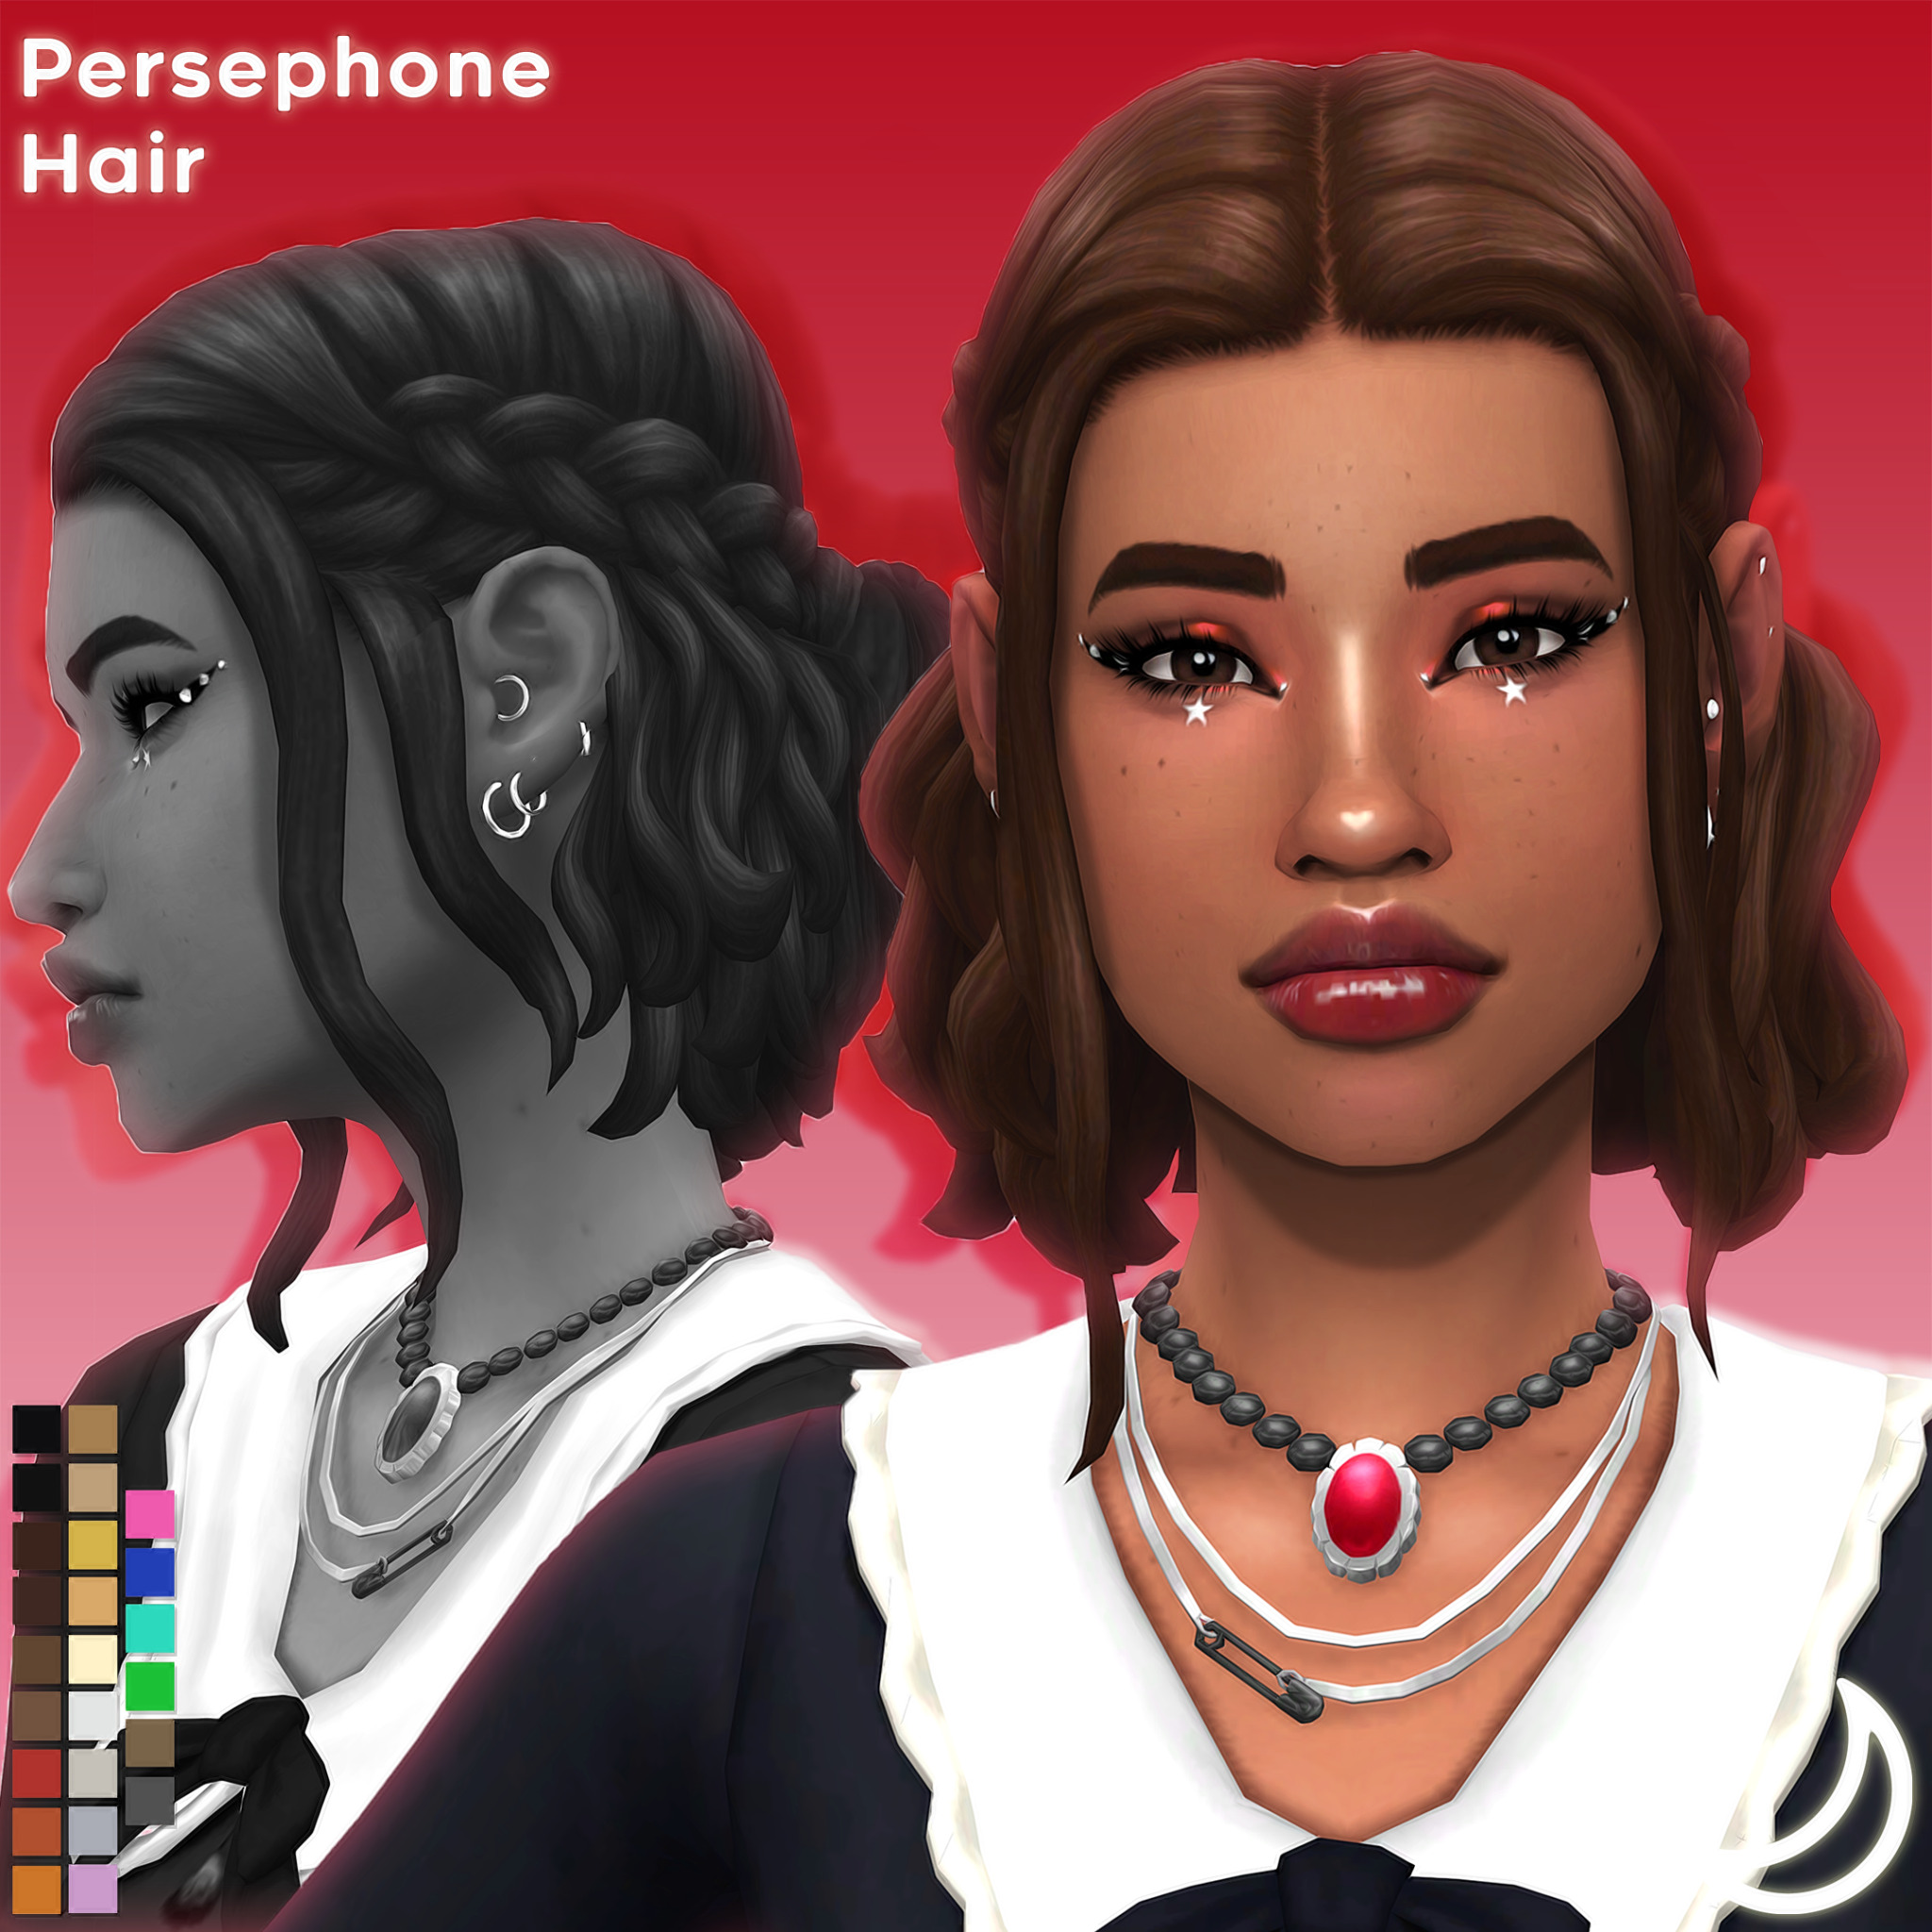 Persephone Hair